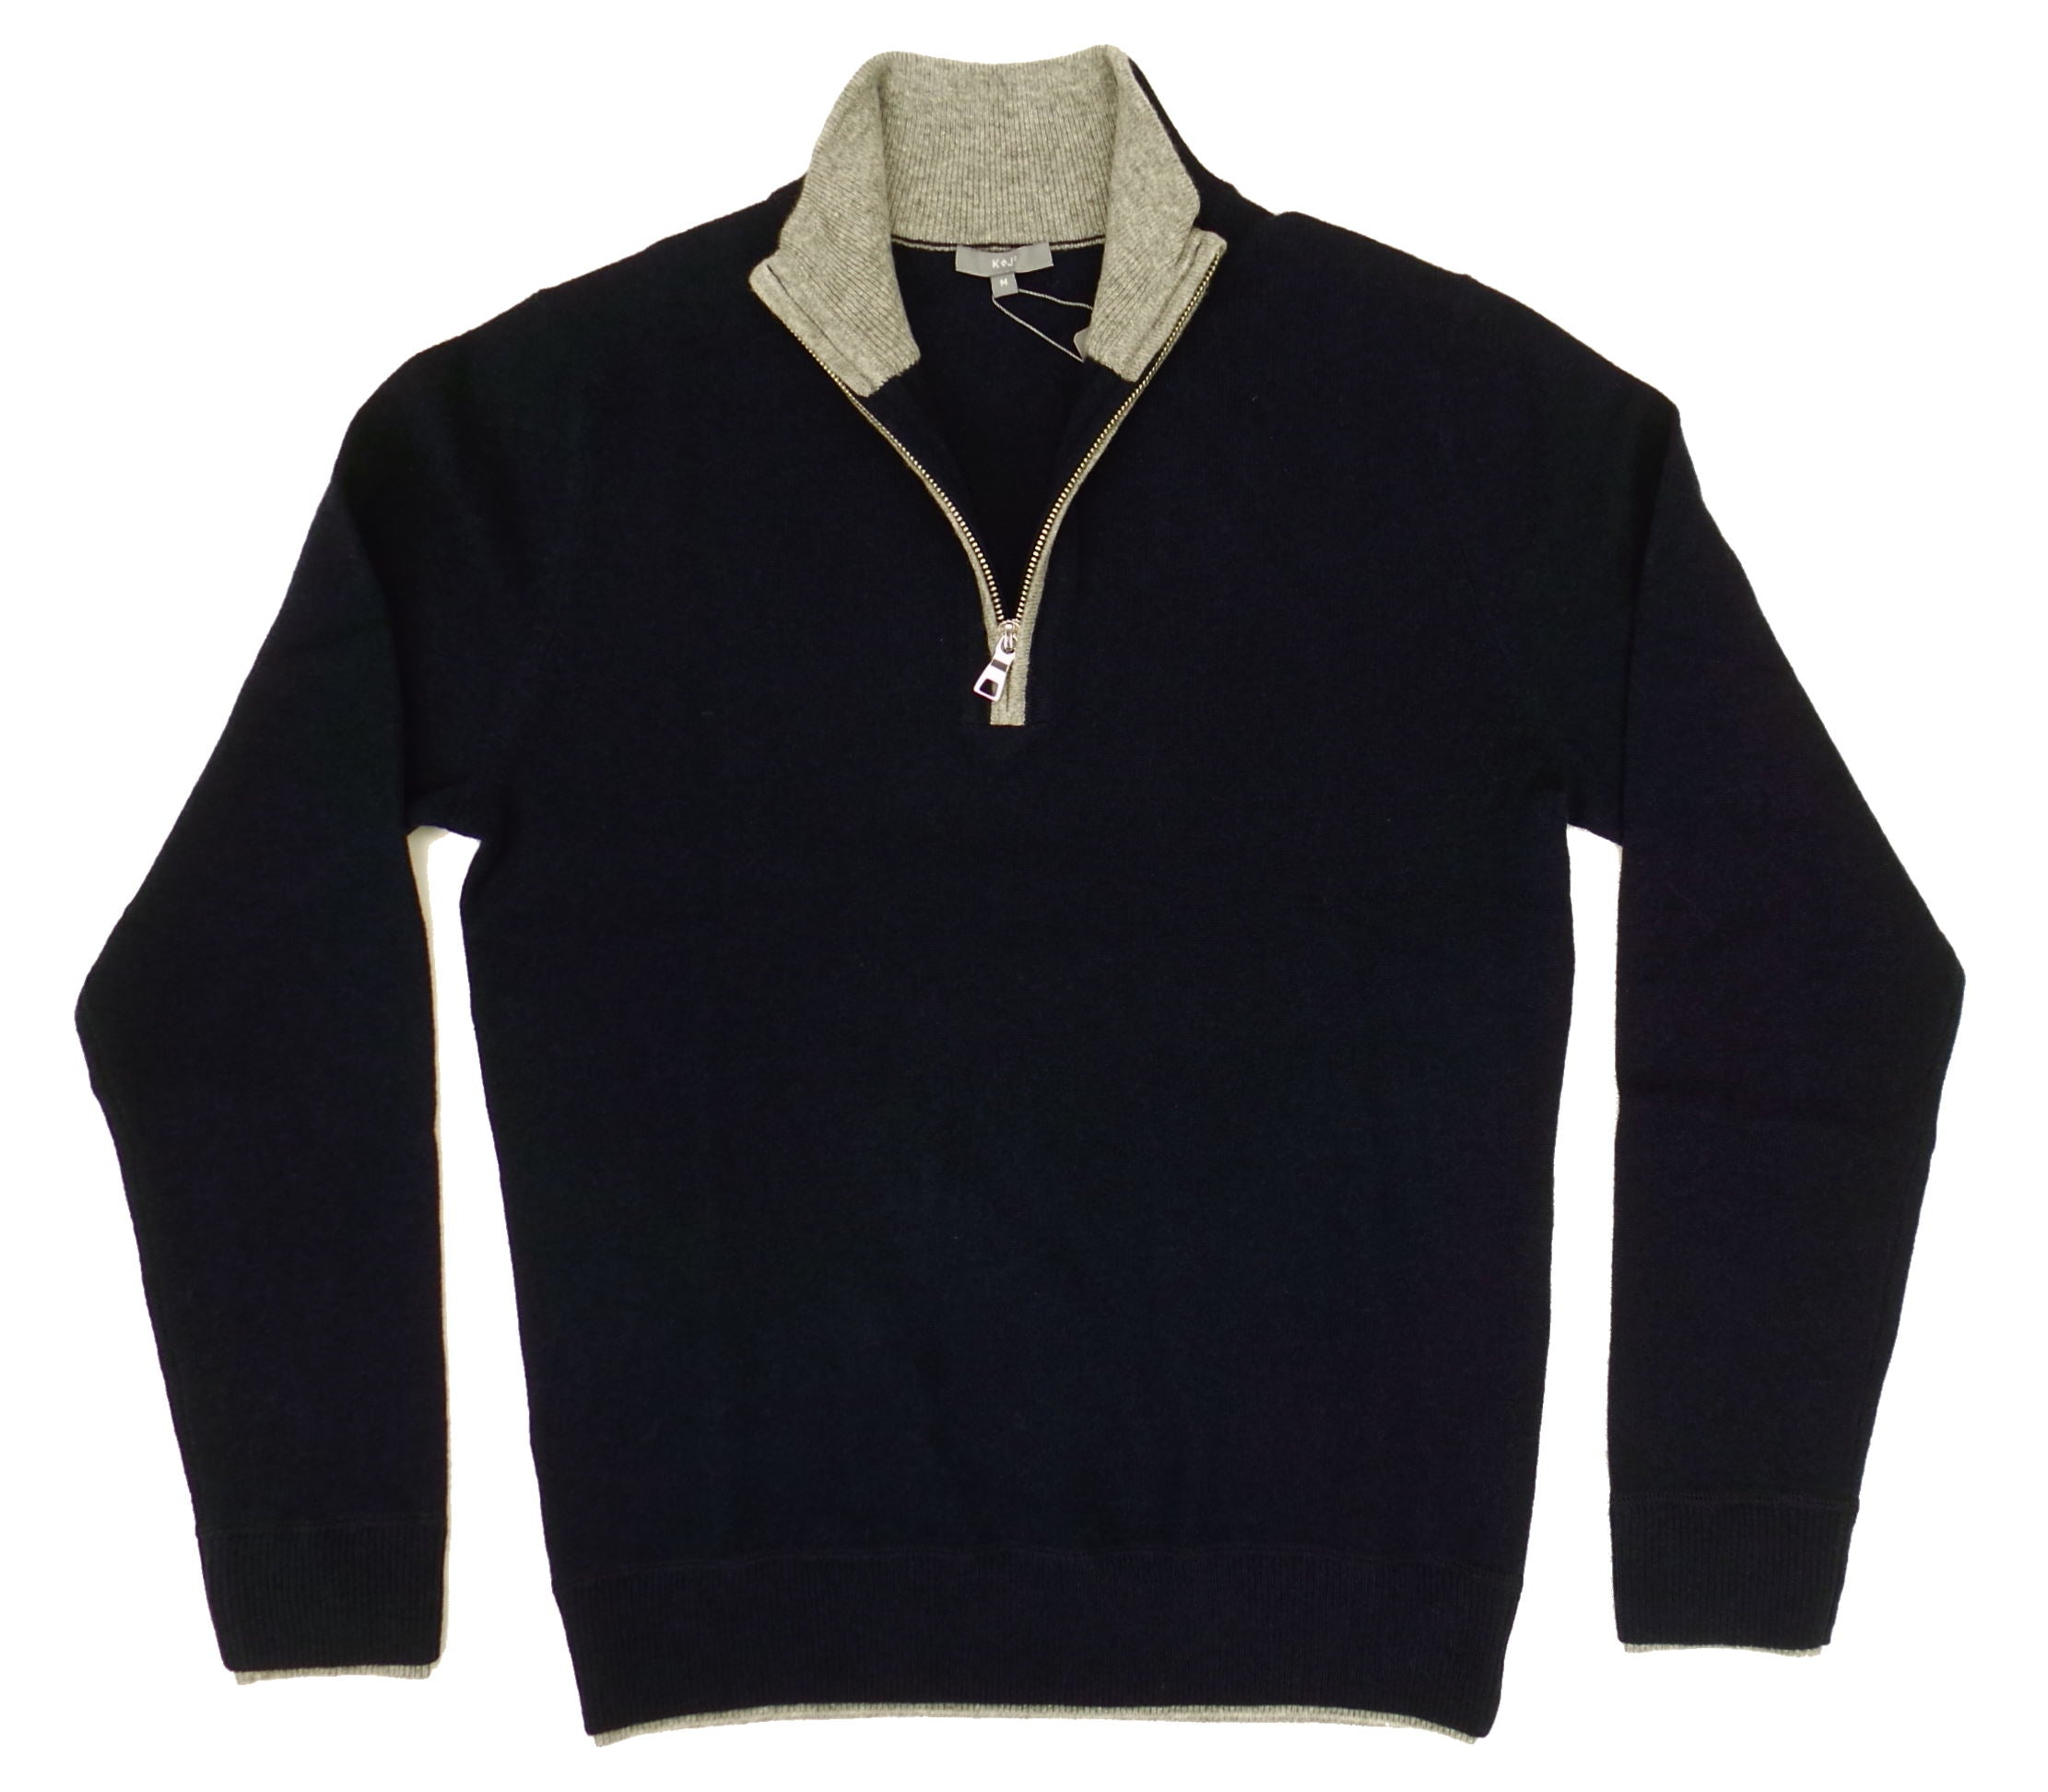 Kier + J Wool Cashmere Blend Tipped Quarter Zip Mock Neck Sweater